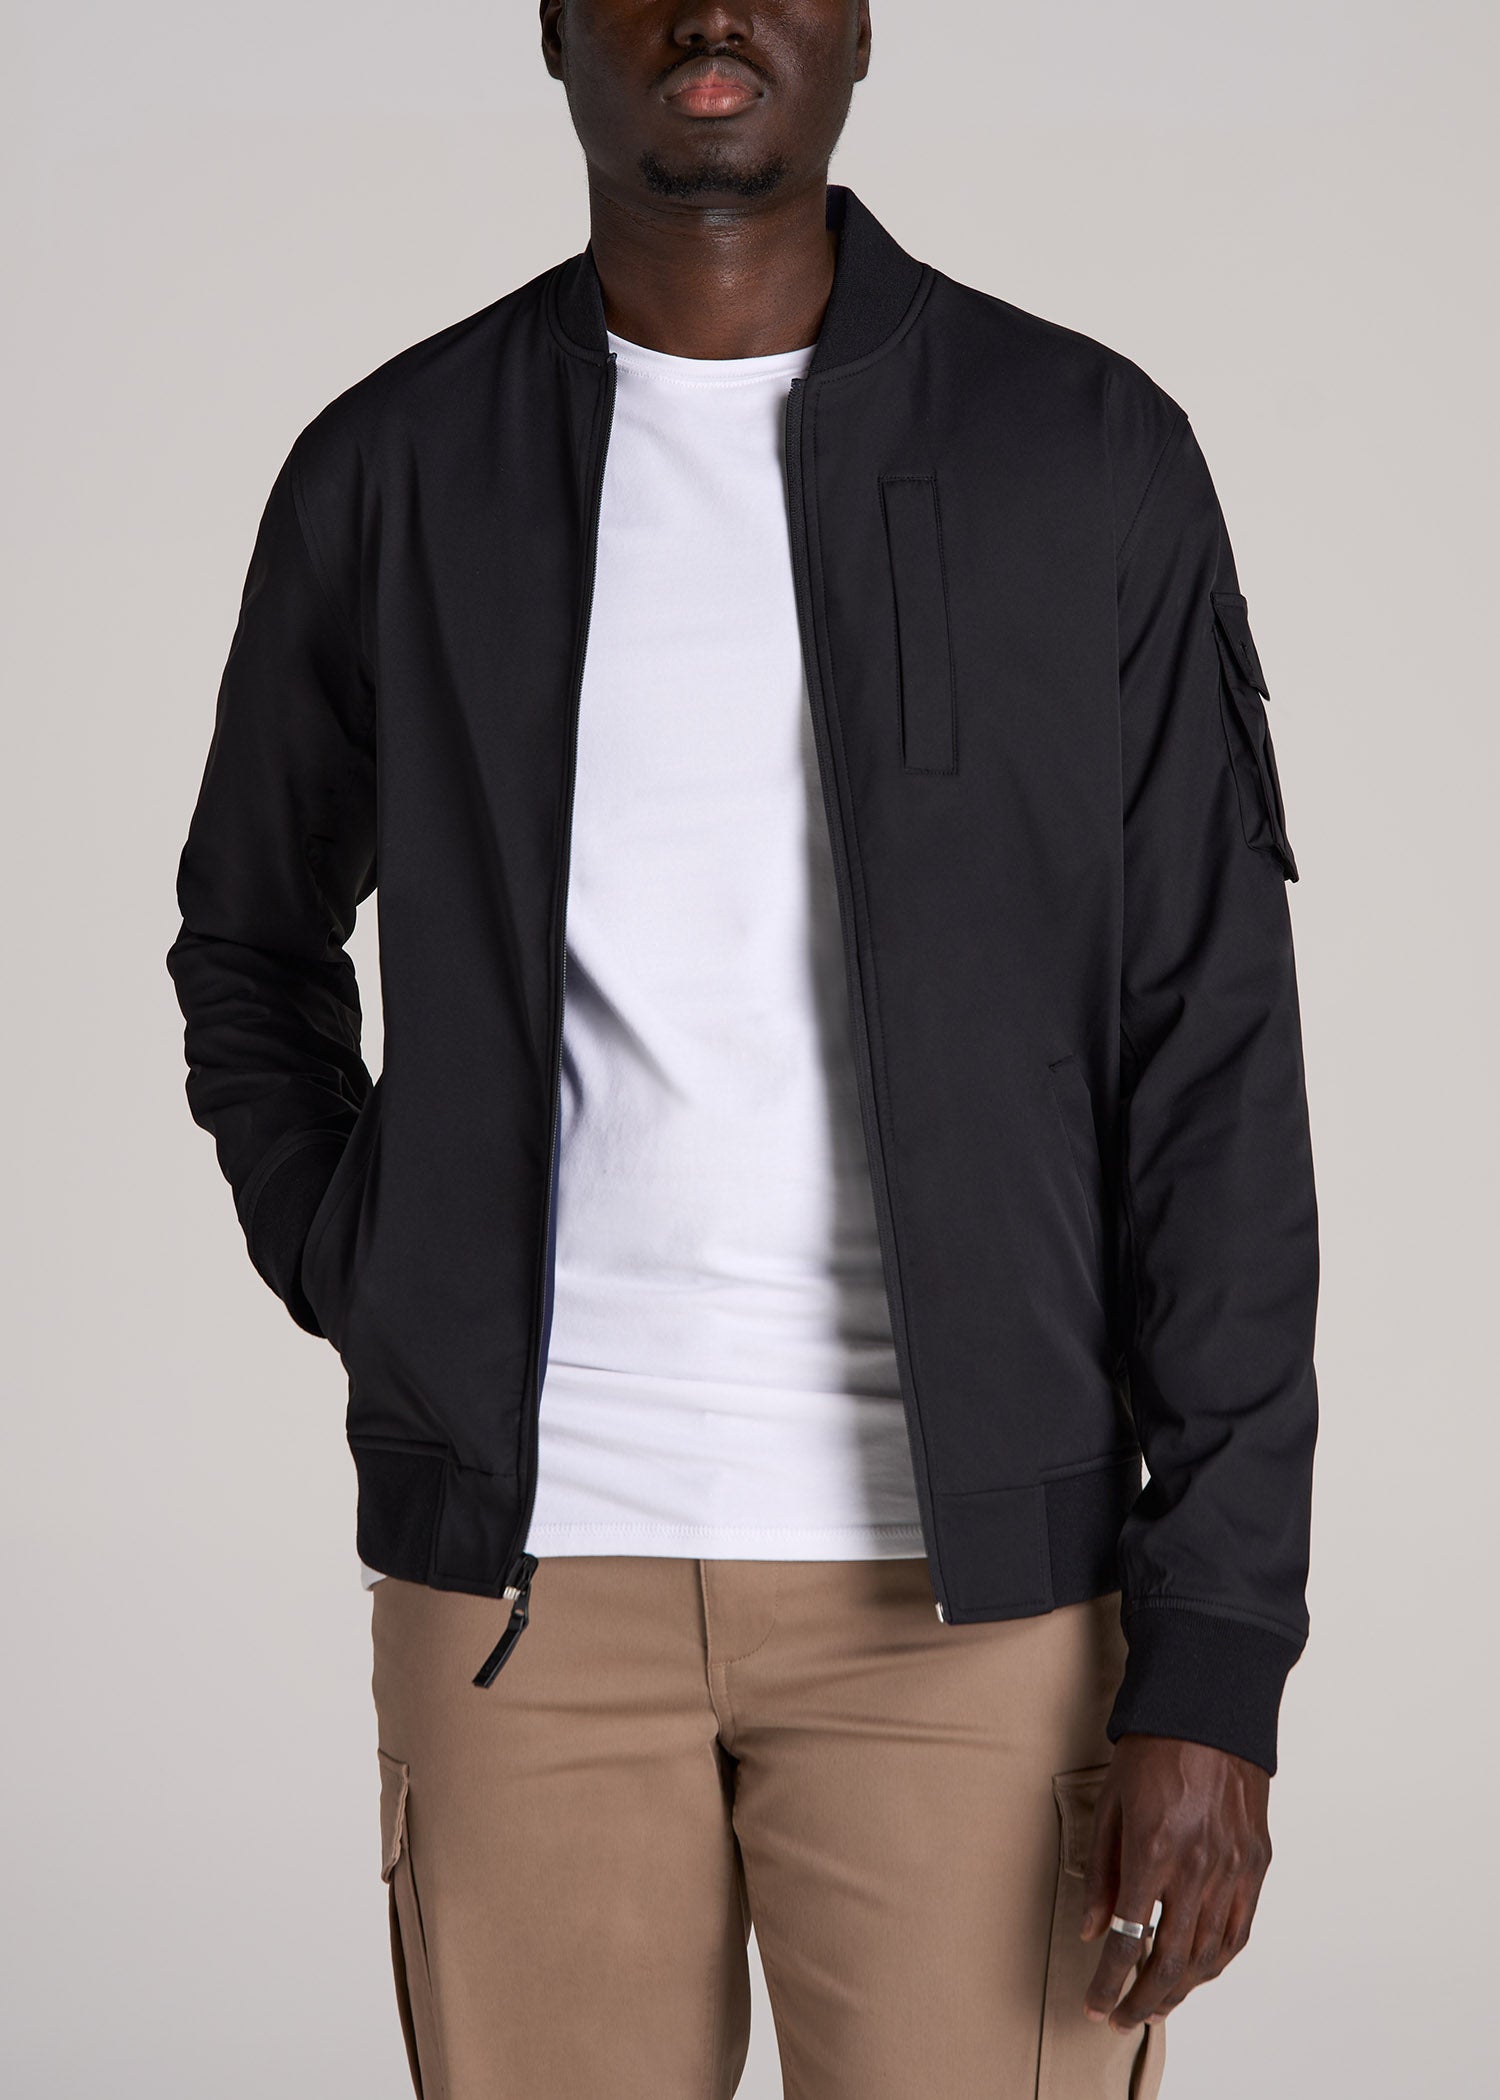 Care+Wear Mens Reversible Fleece Jacket, Black/Gray / S / No